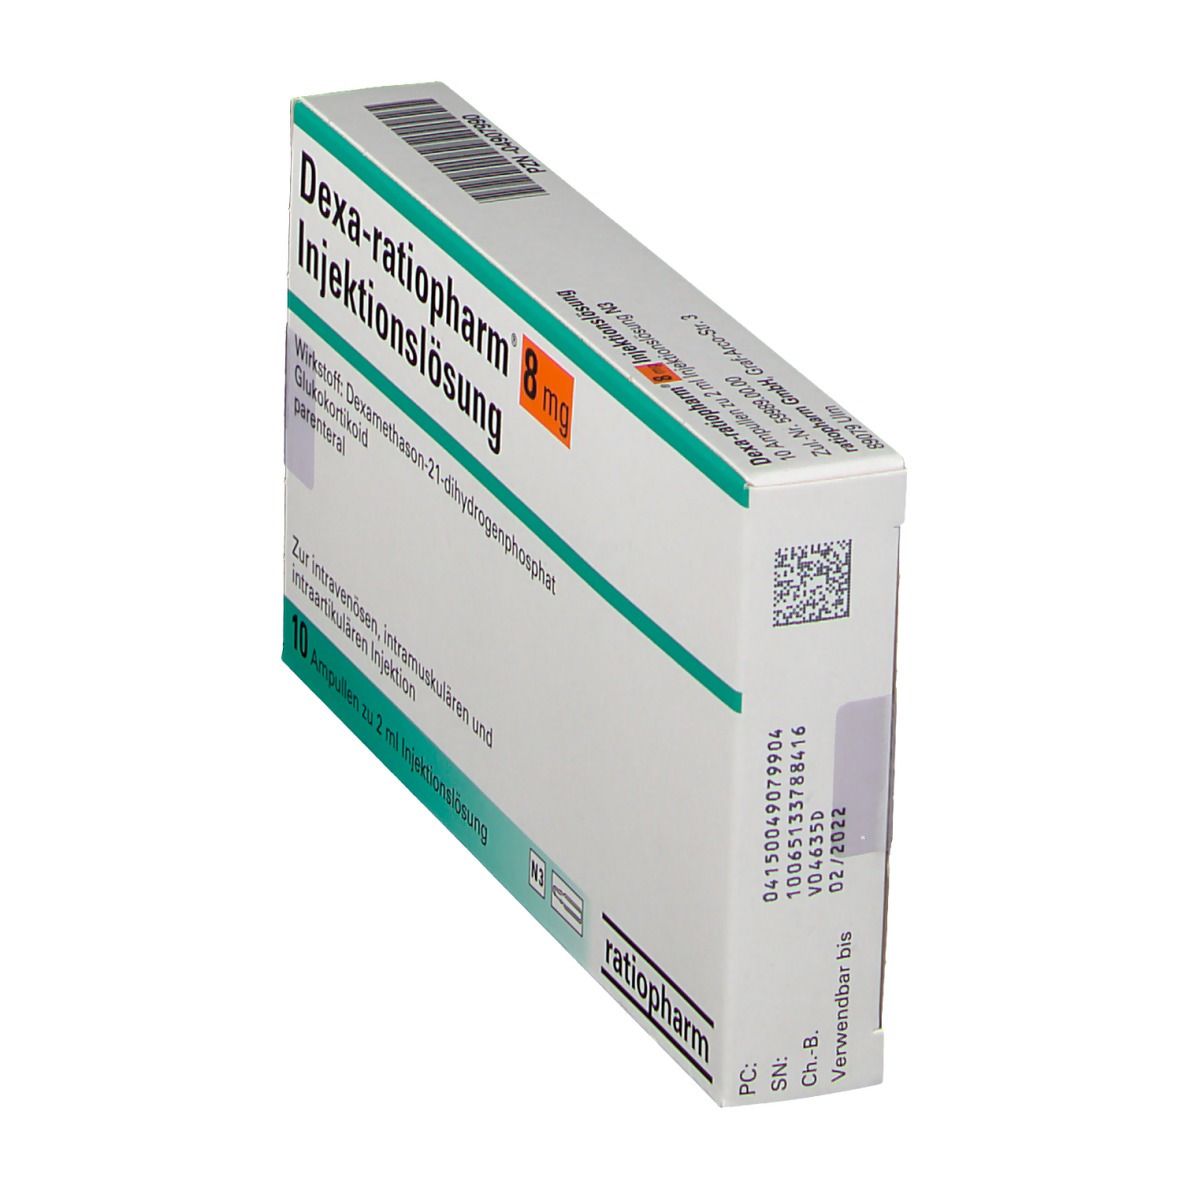 Dexa-ratiopharm® 8 mg